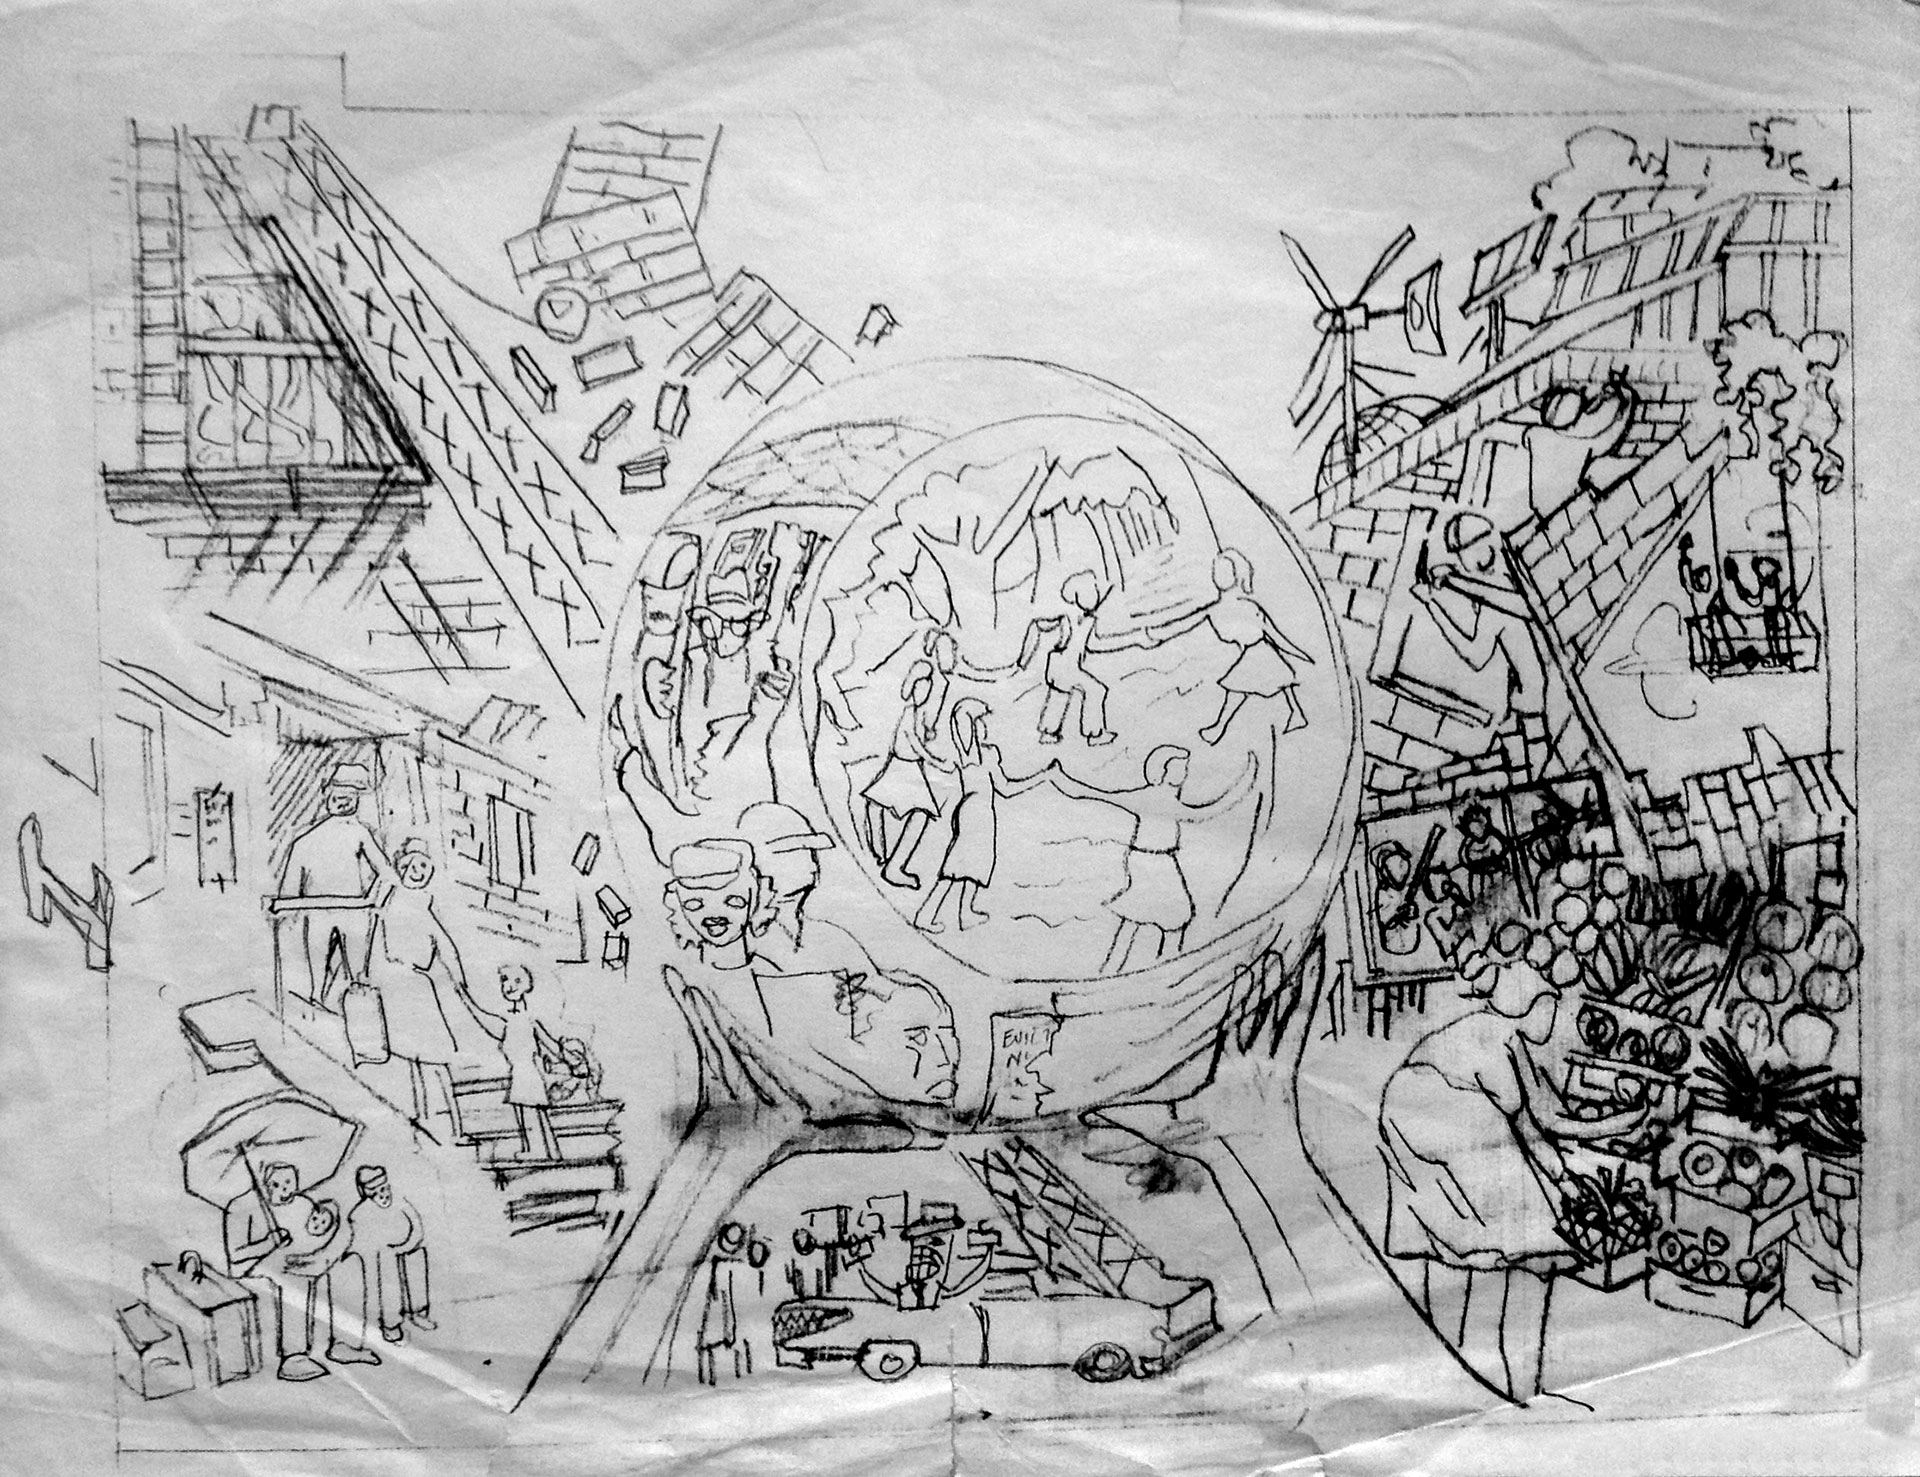   Eva Cockcroft’s sketch for the collective mural   Courtesy of Rikki Asher  